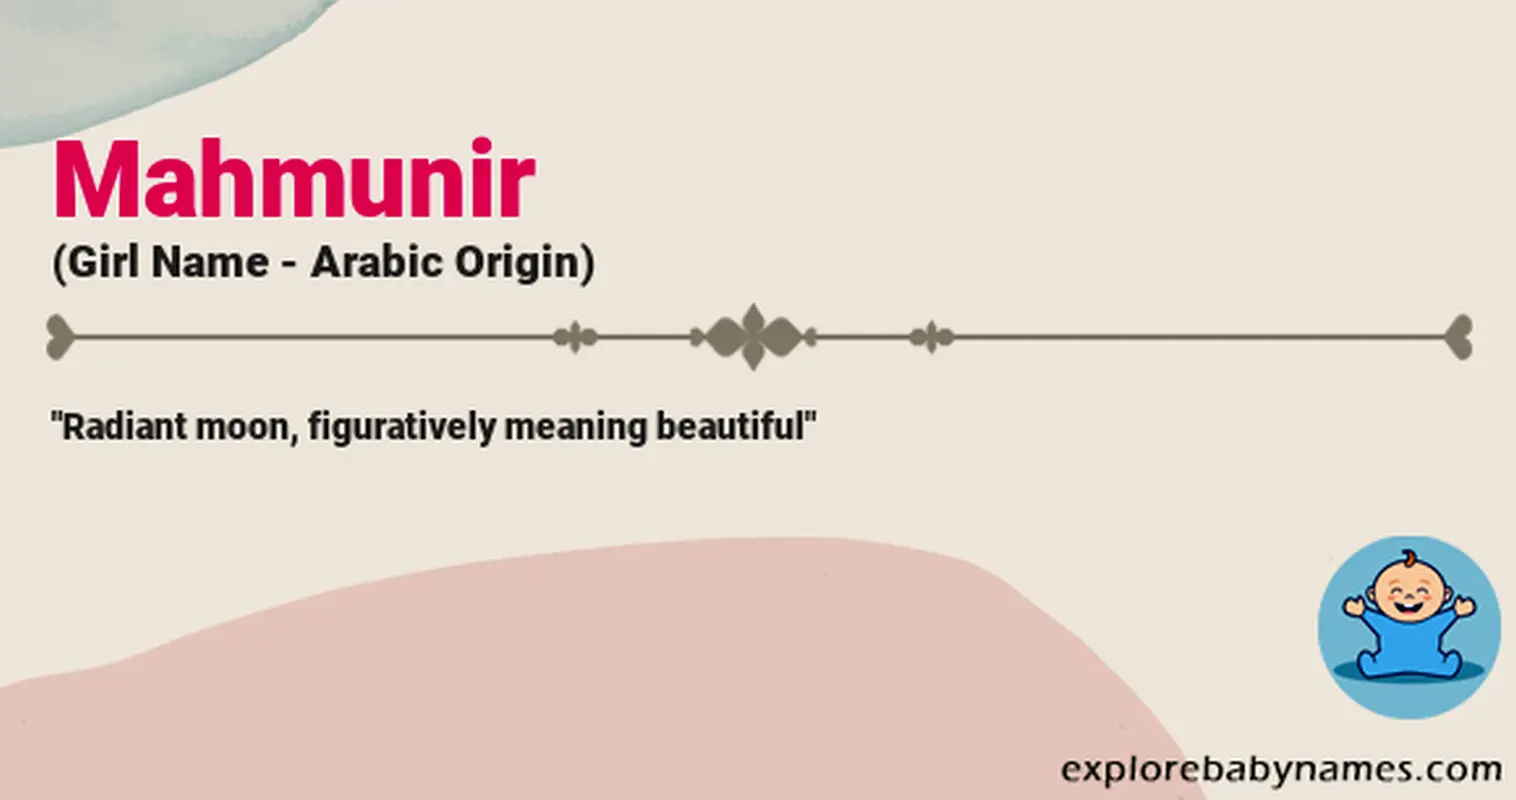 Meaning of Mahmunir